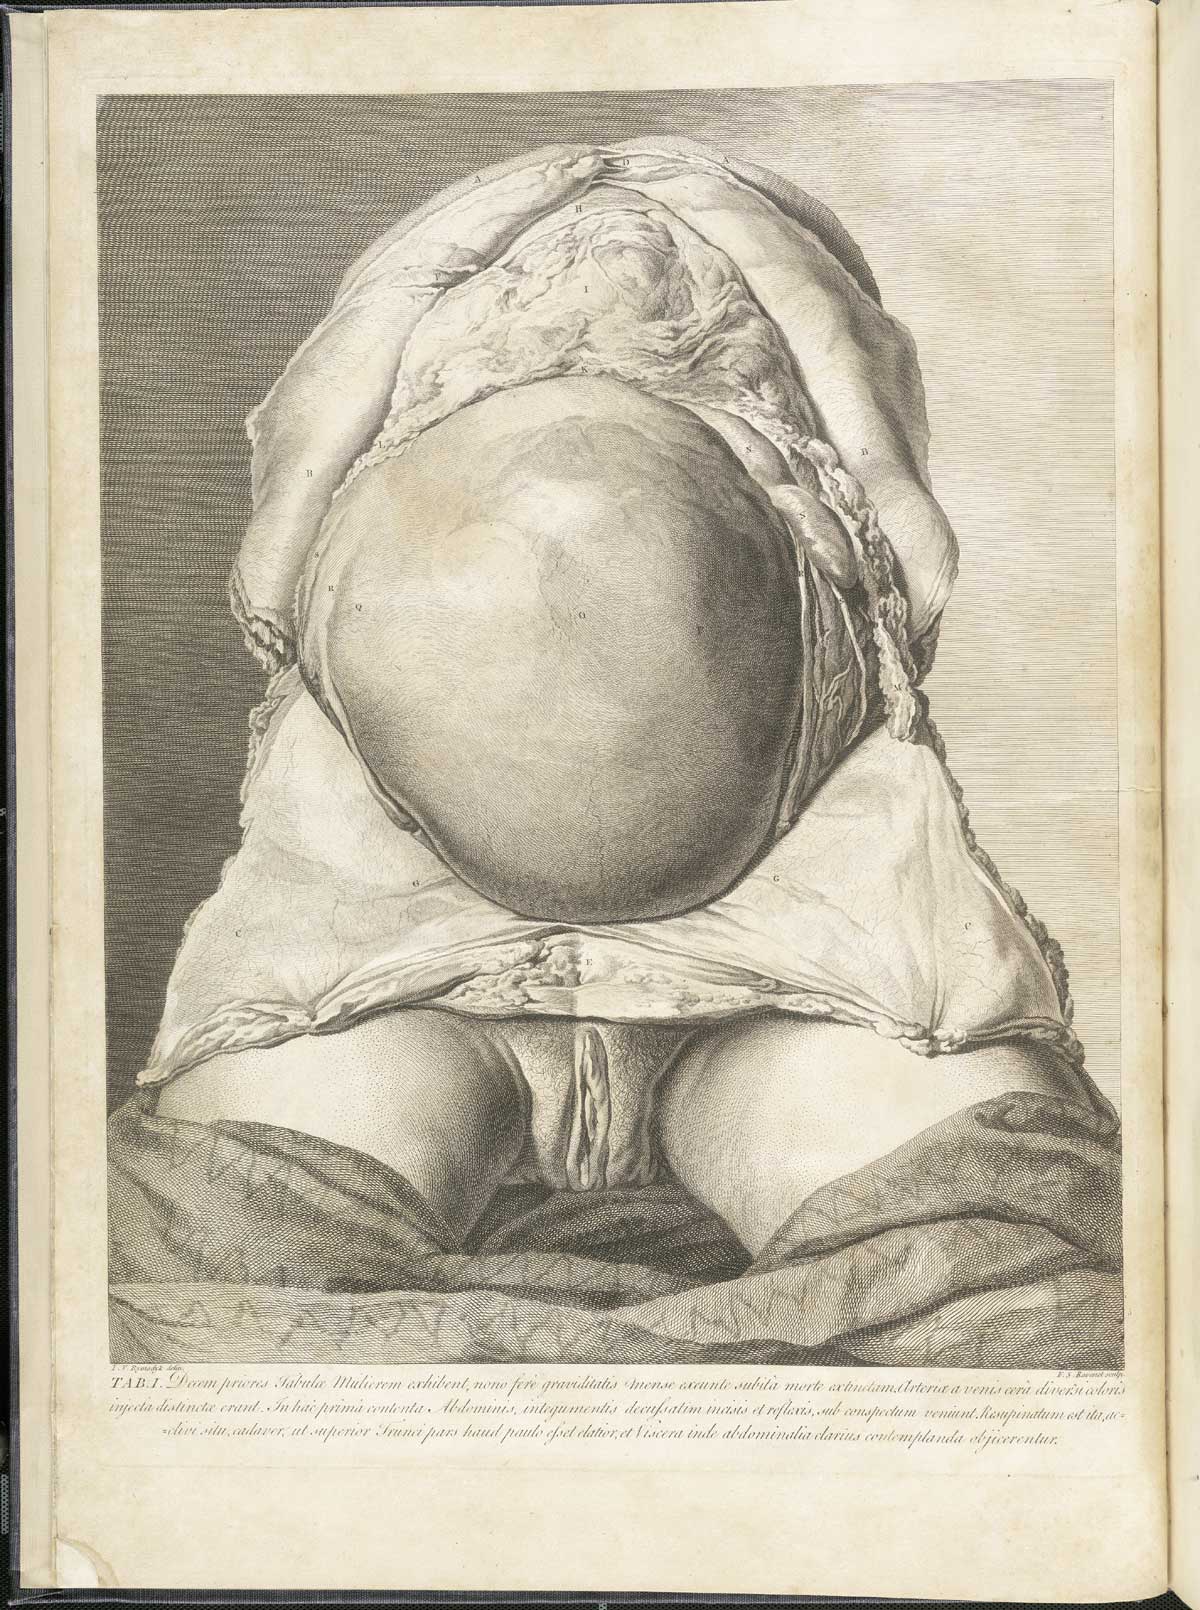 Table 1 of William Hunter's Anatomia uteri humani gravidi tabulis illustrata, featuring the frontal view of female dissected to expose the gravid uterus.